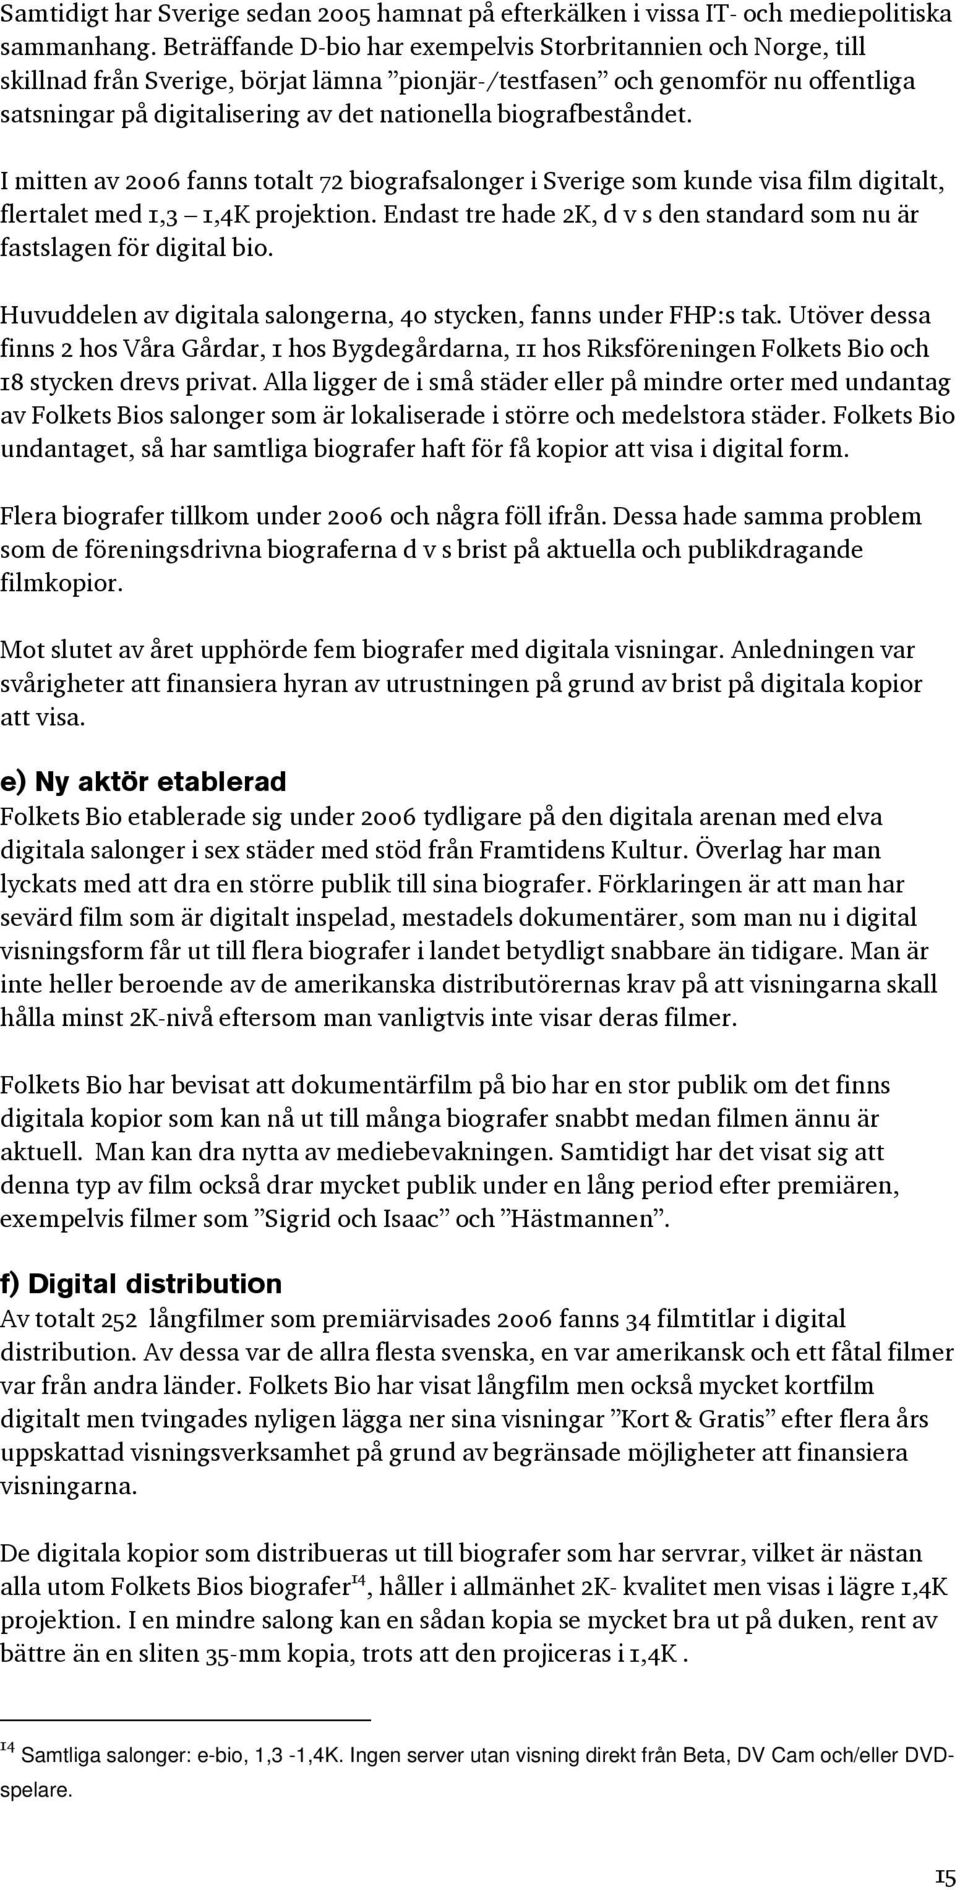 biografbeståndet. I mitten av 2006 fanns totalt 72 biografsalonger i Sverige som kunde visa film digitalt, flertalet med 1,3 1,4K projektion.